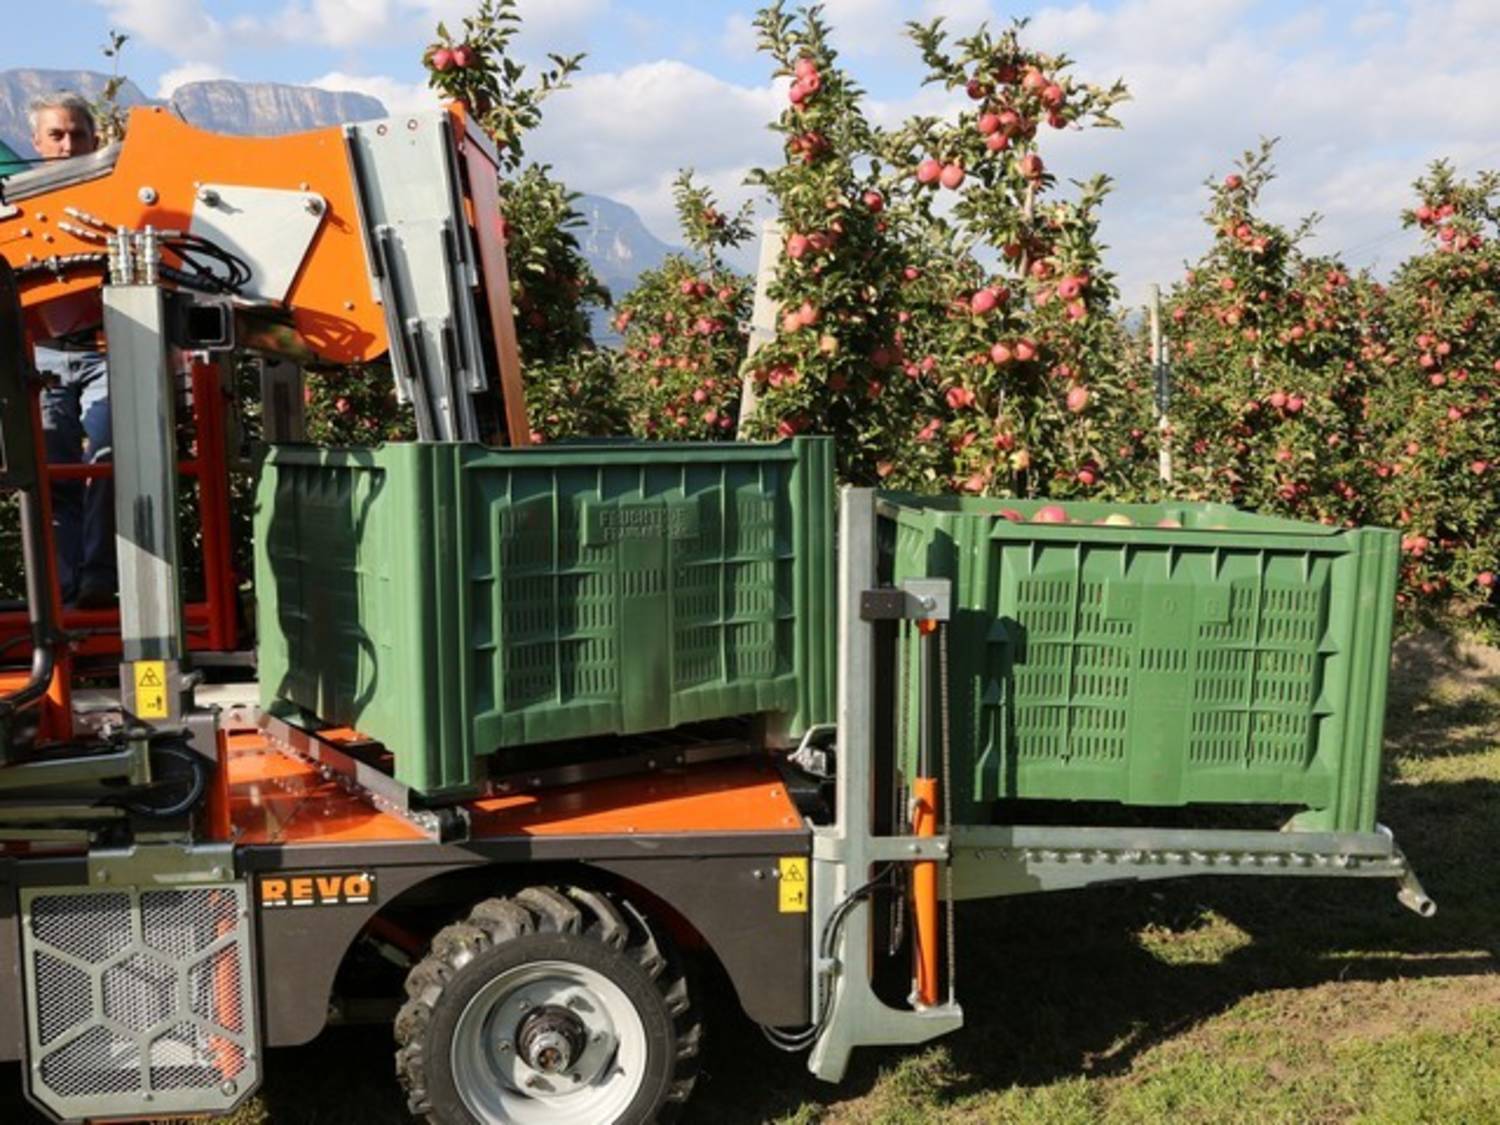 Revo Piuma 4WD Fruit Harvester